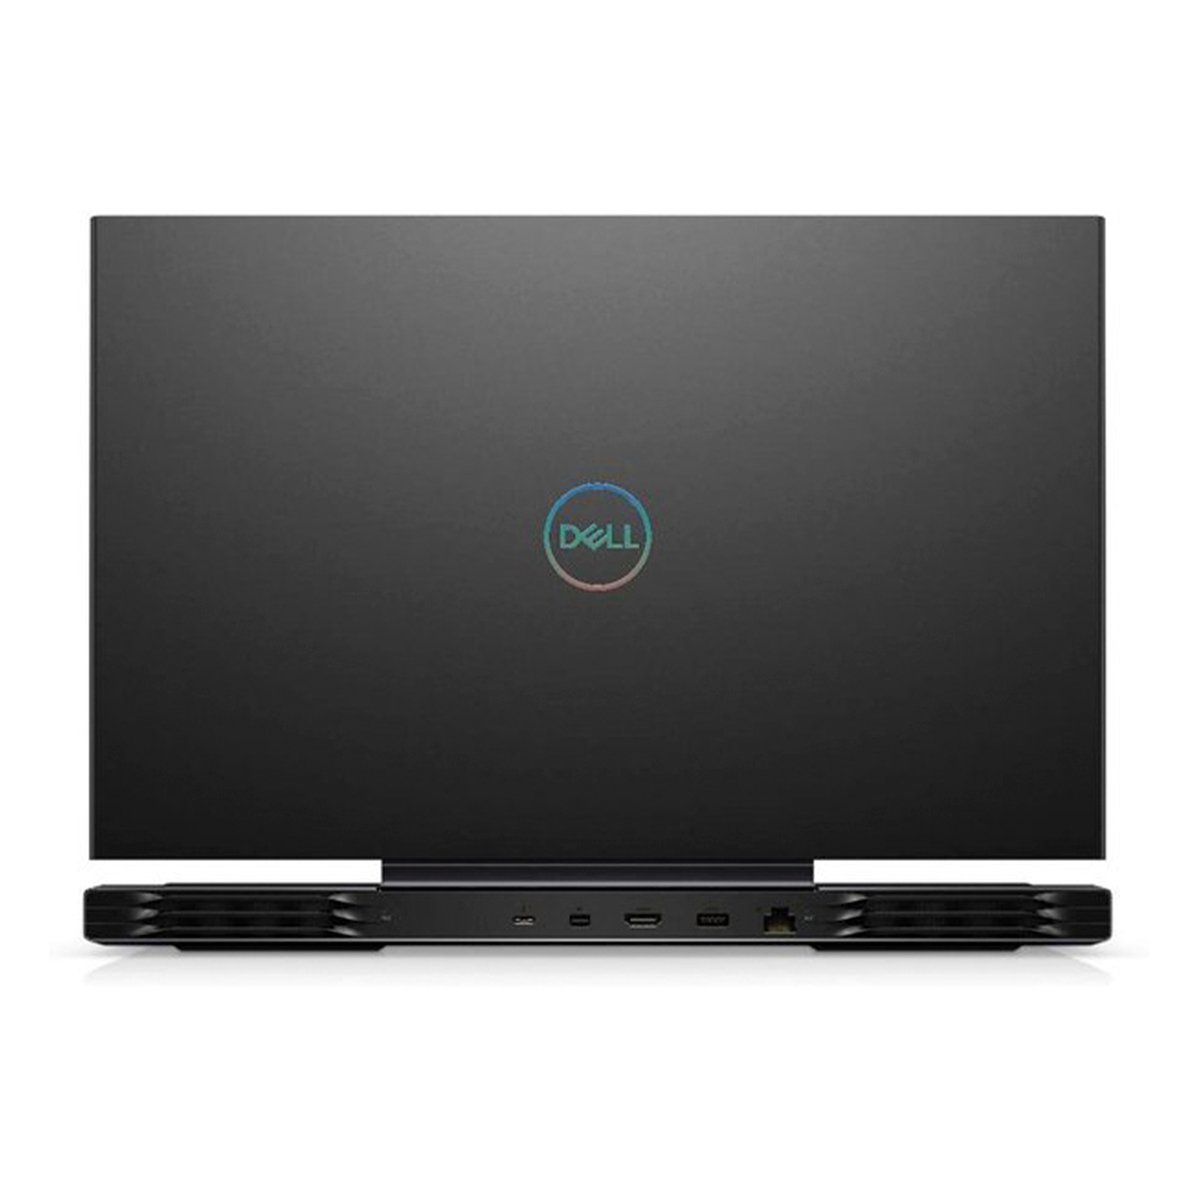 Dell Gaming Laptop G7 (7700-G7-3600-BLK),Intel i7-10750H,16GB RAM,1TB SSD,128GB SSD,GeForce GTX 2060 6GB,17.3" FHD,Black